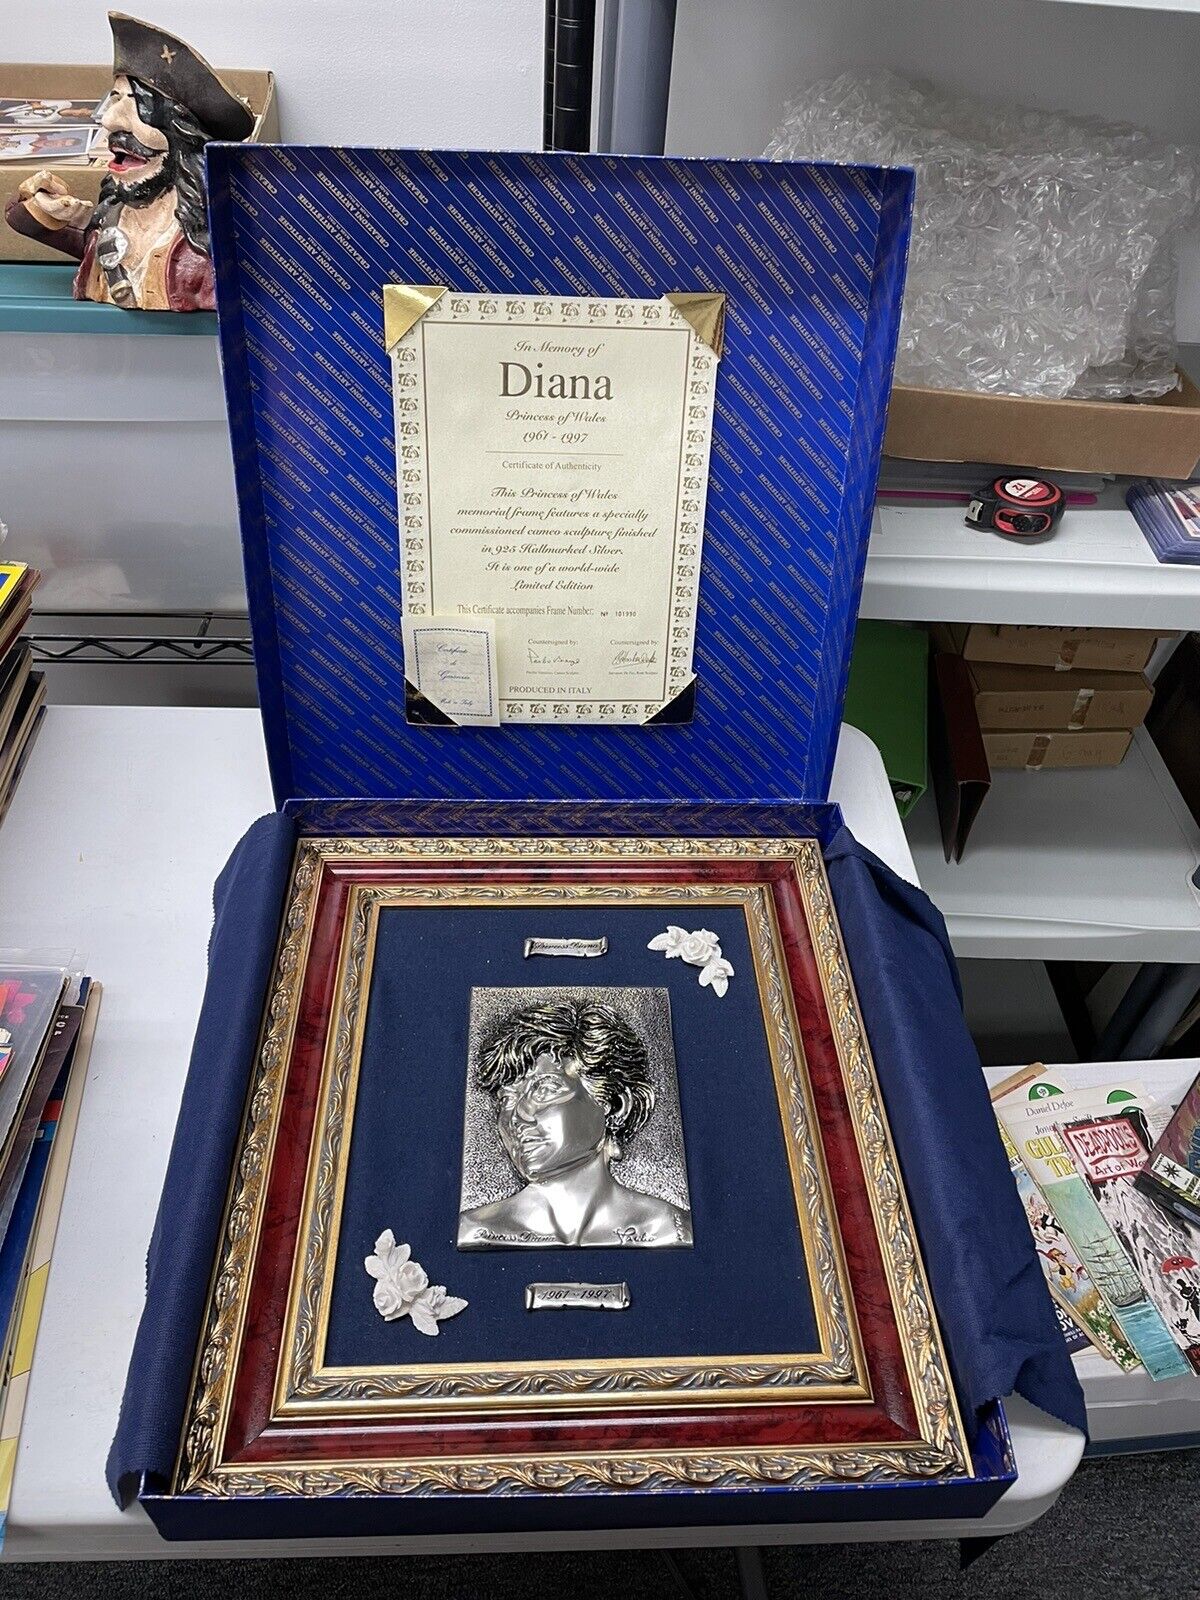 Princess Diana Queen of Hearts memorial Plaque, By Creazioni Artistiche In Italy